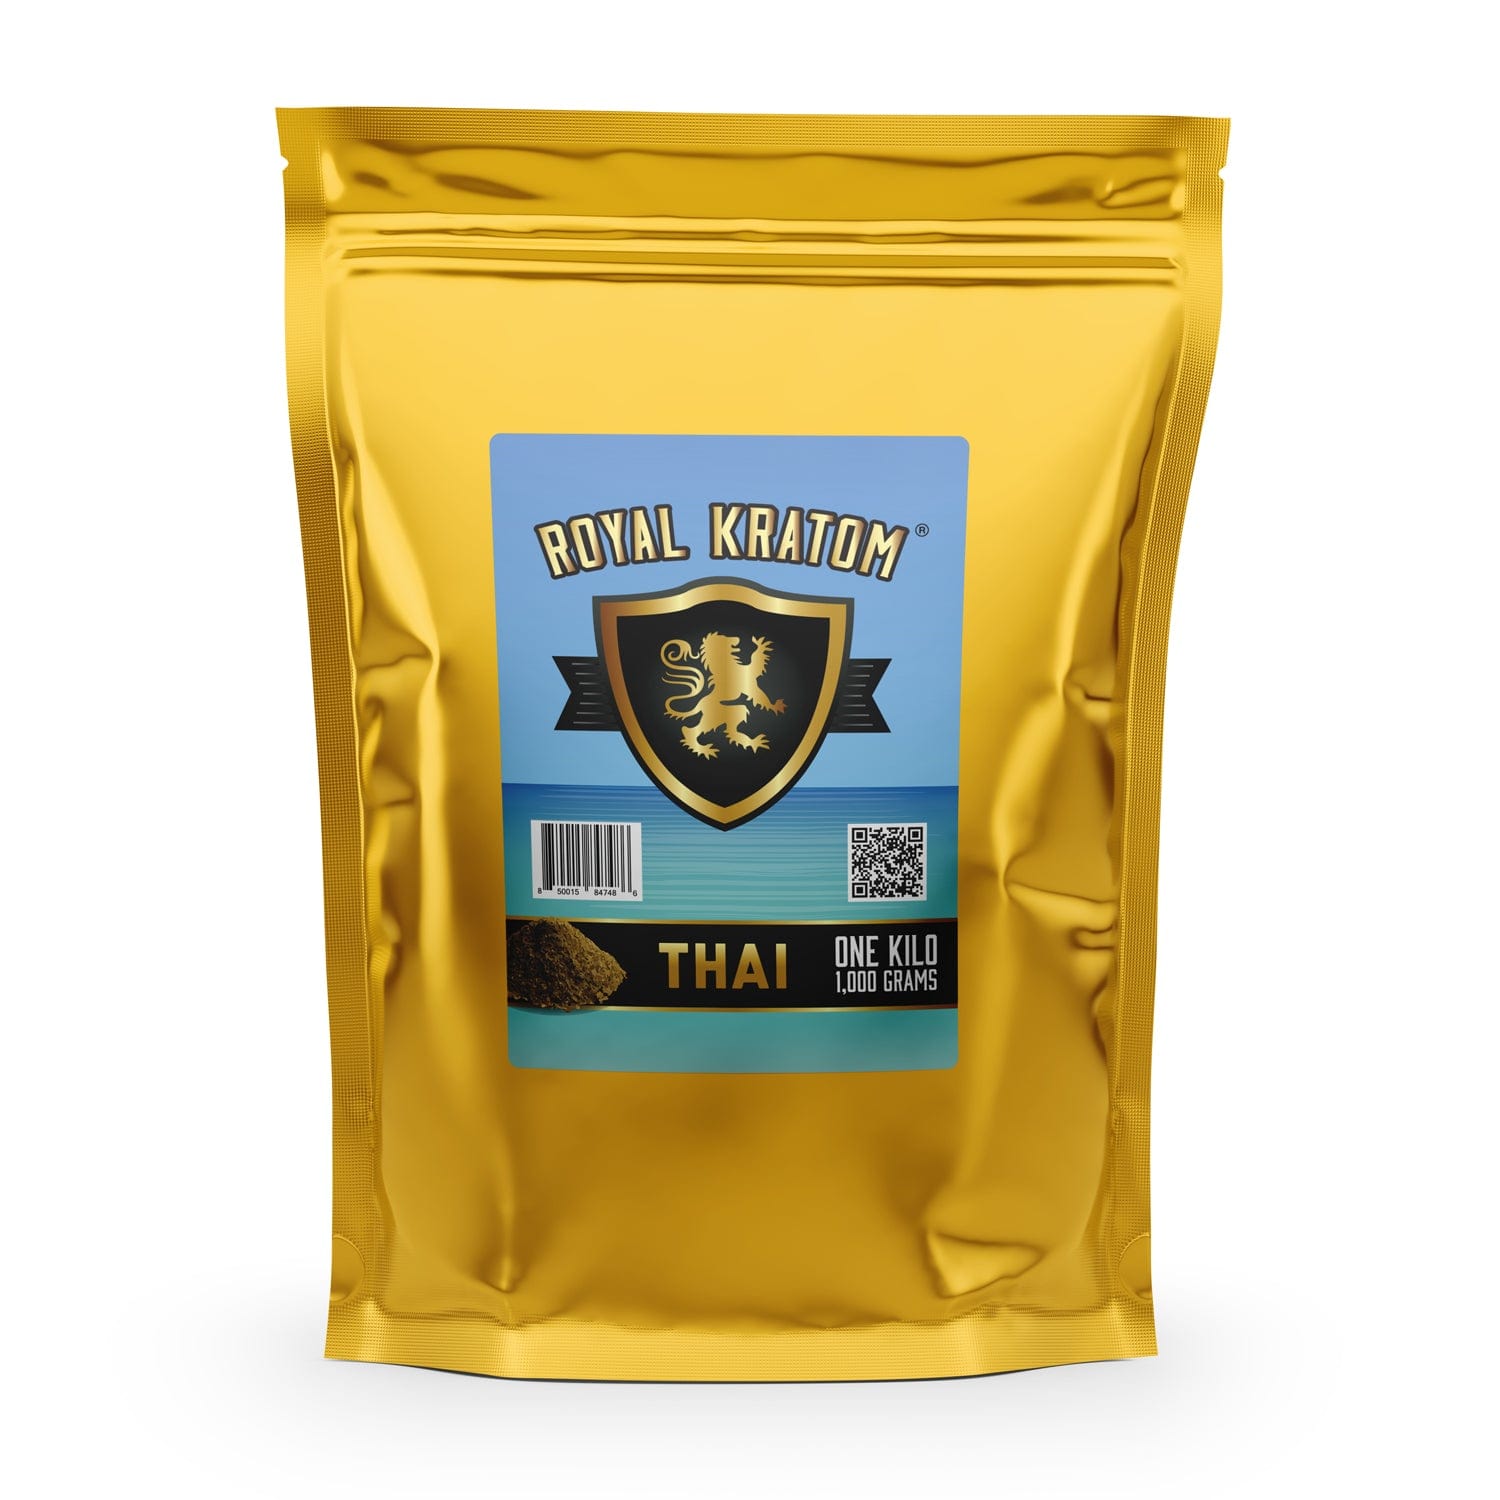 Royal Kratom Thai Kratom Powder 1000 Grams Kilo package